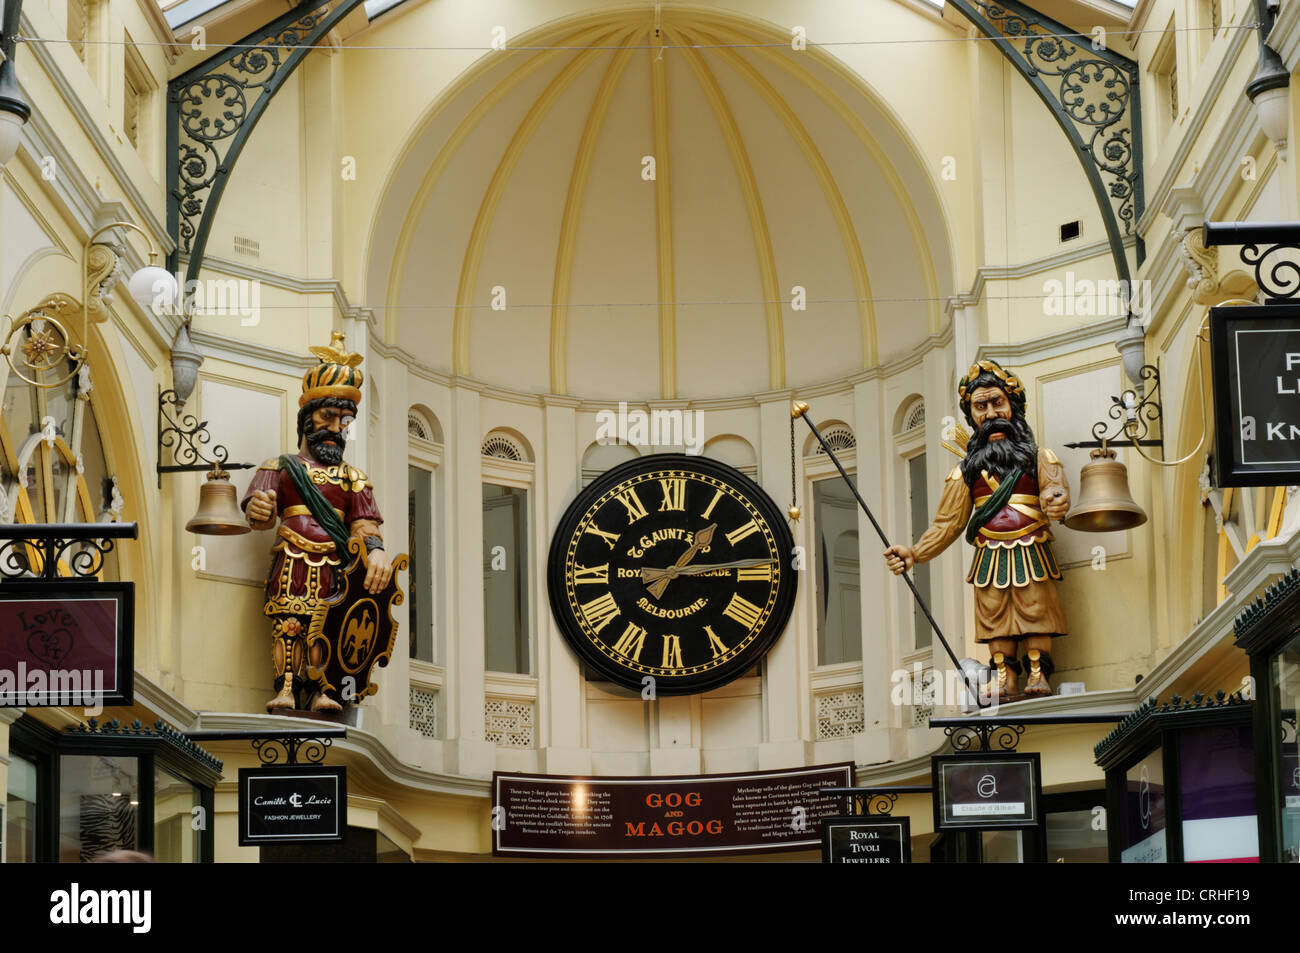 Sculptures of Gog and Magog Inside Royal Arcade in Melbourne, Australia Stock Photo